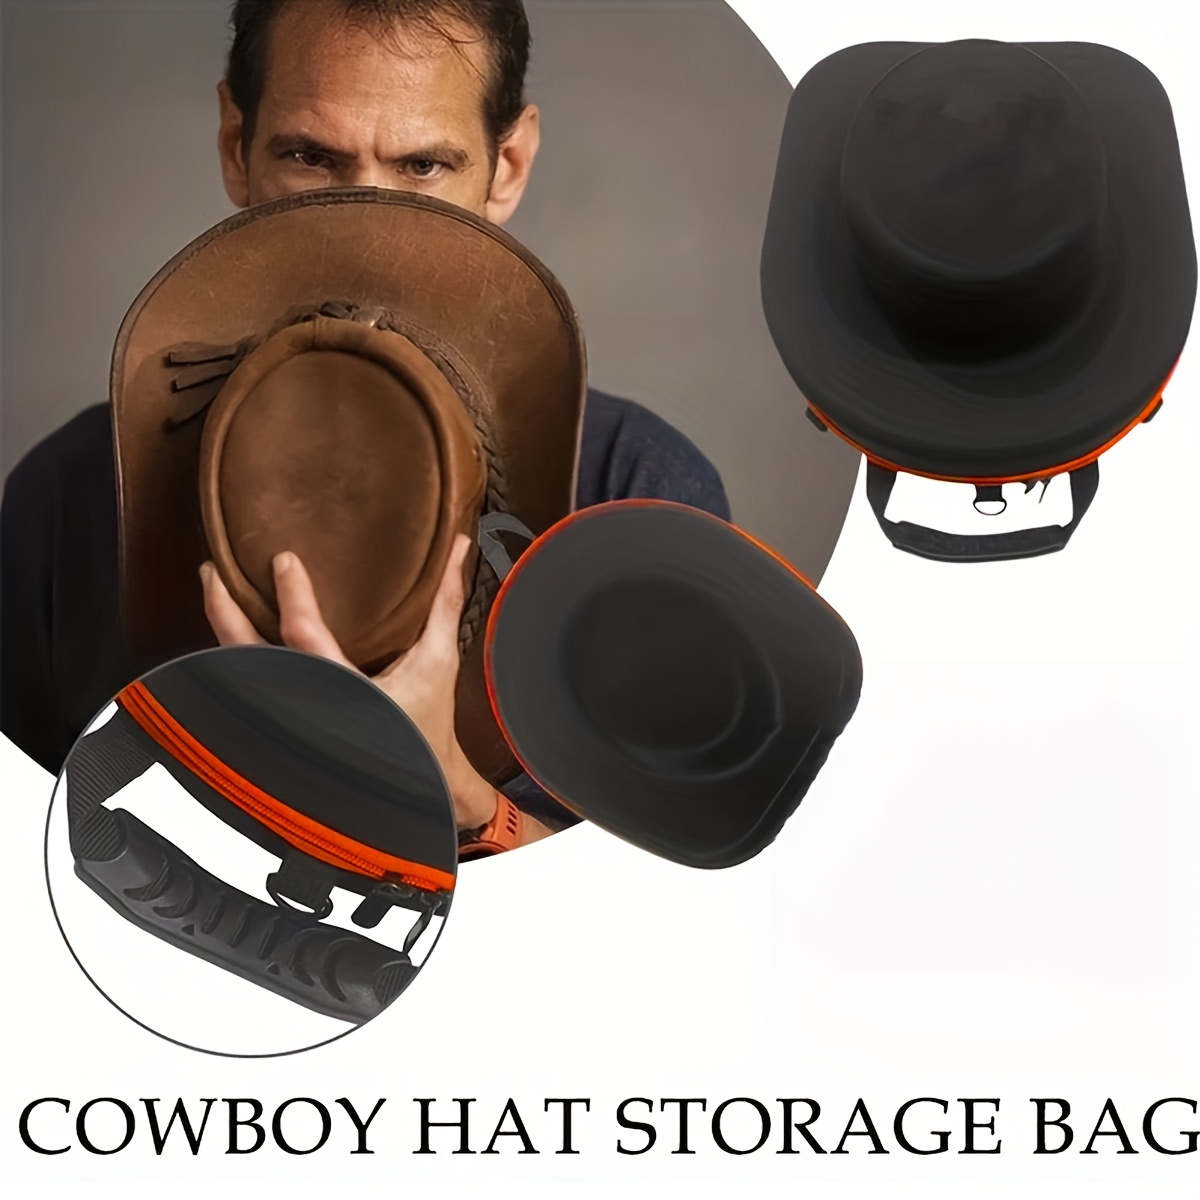 Travel Fedora Case Bucker/Baseball Hats Storage Box Adjustable